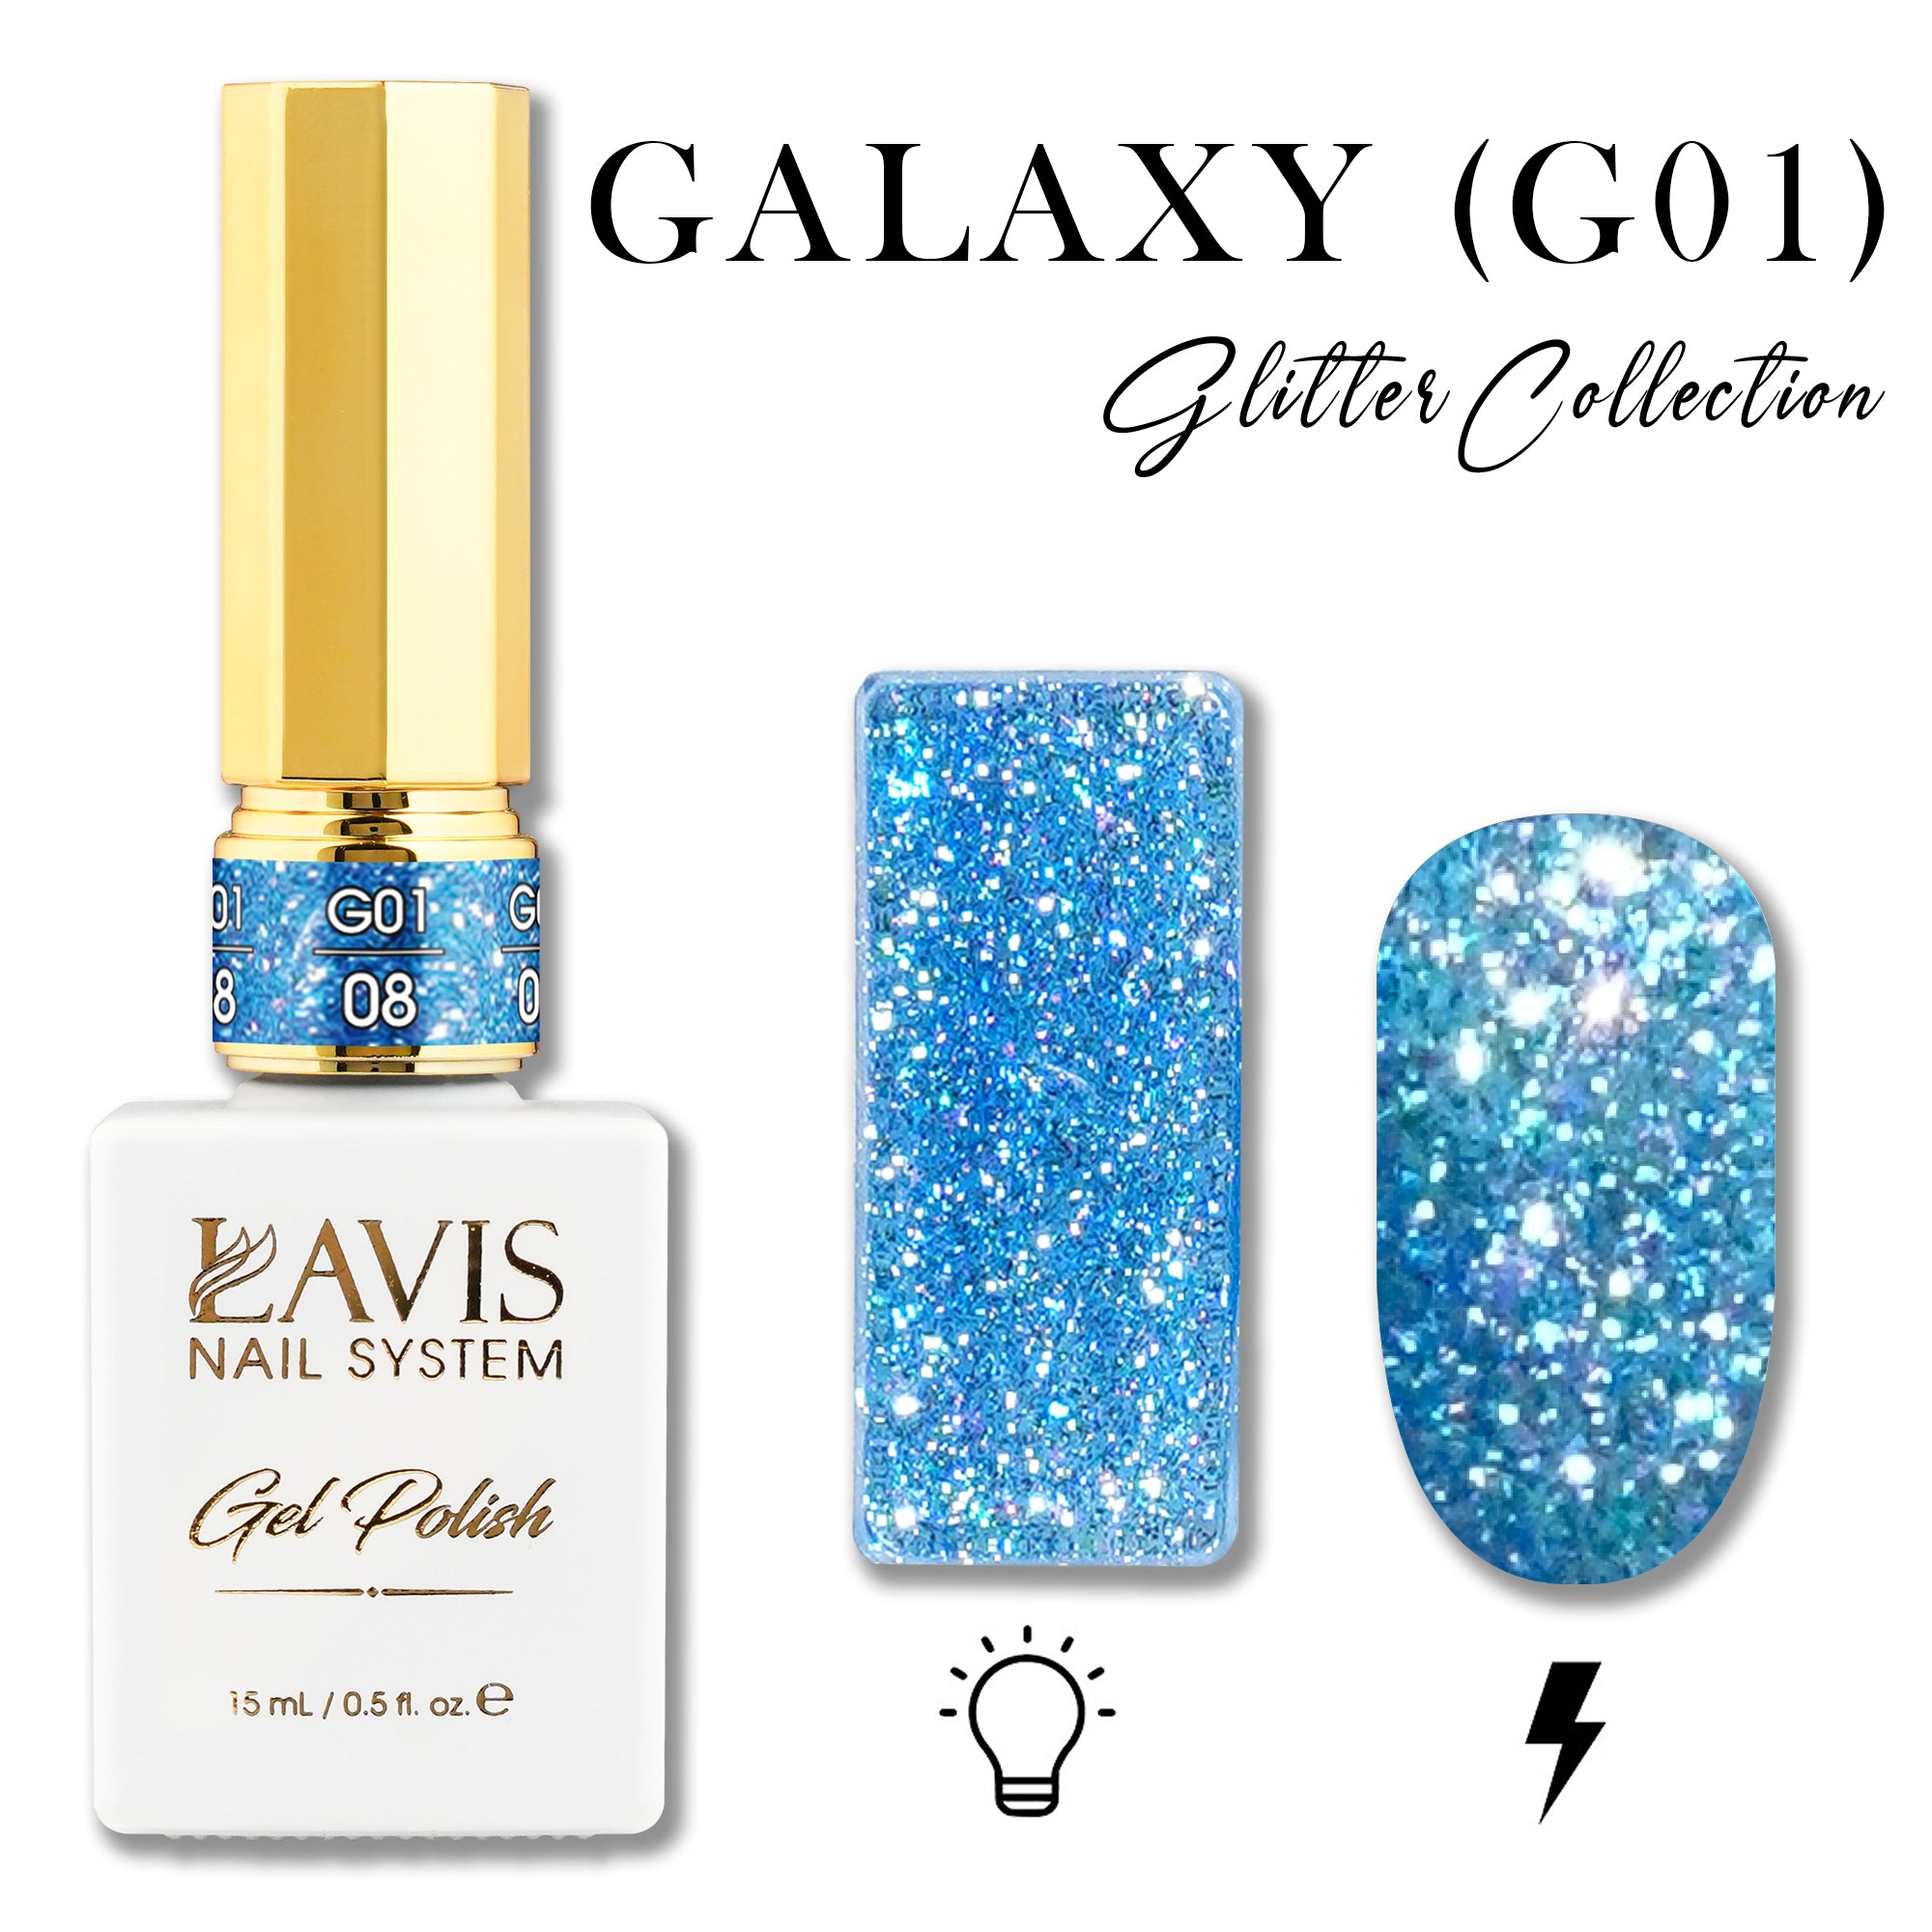 LAVIS Glitter G01 - 08 - Gel Polish 0.5 oz - Galaxy Collection